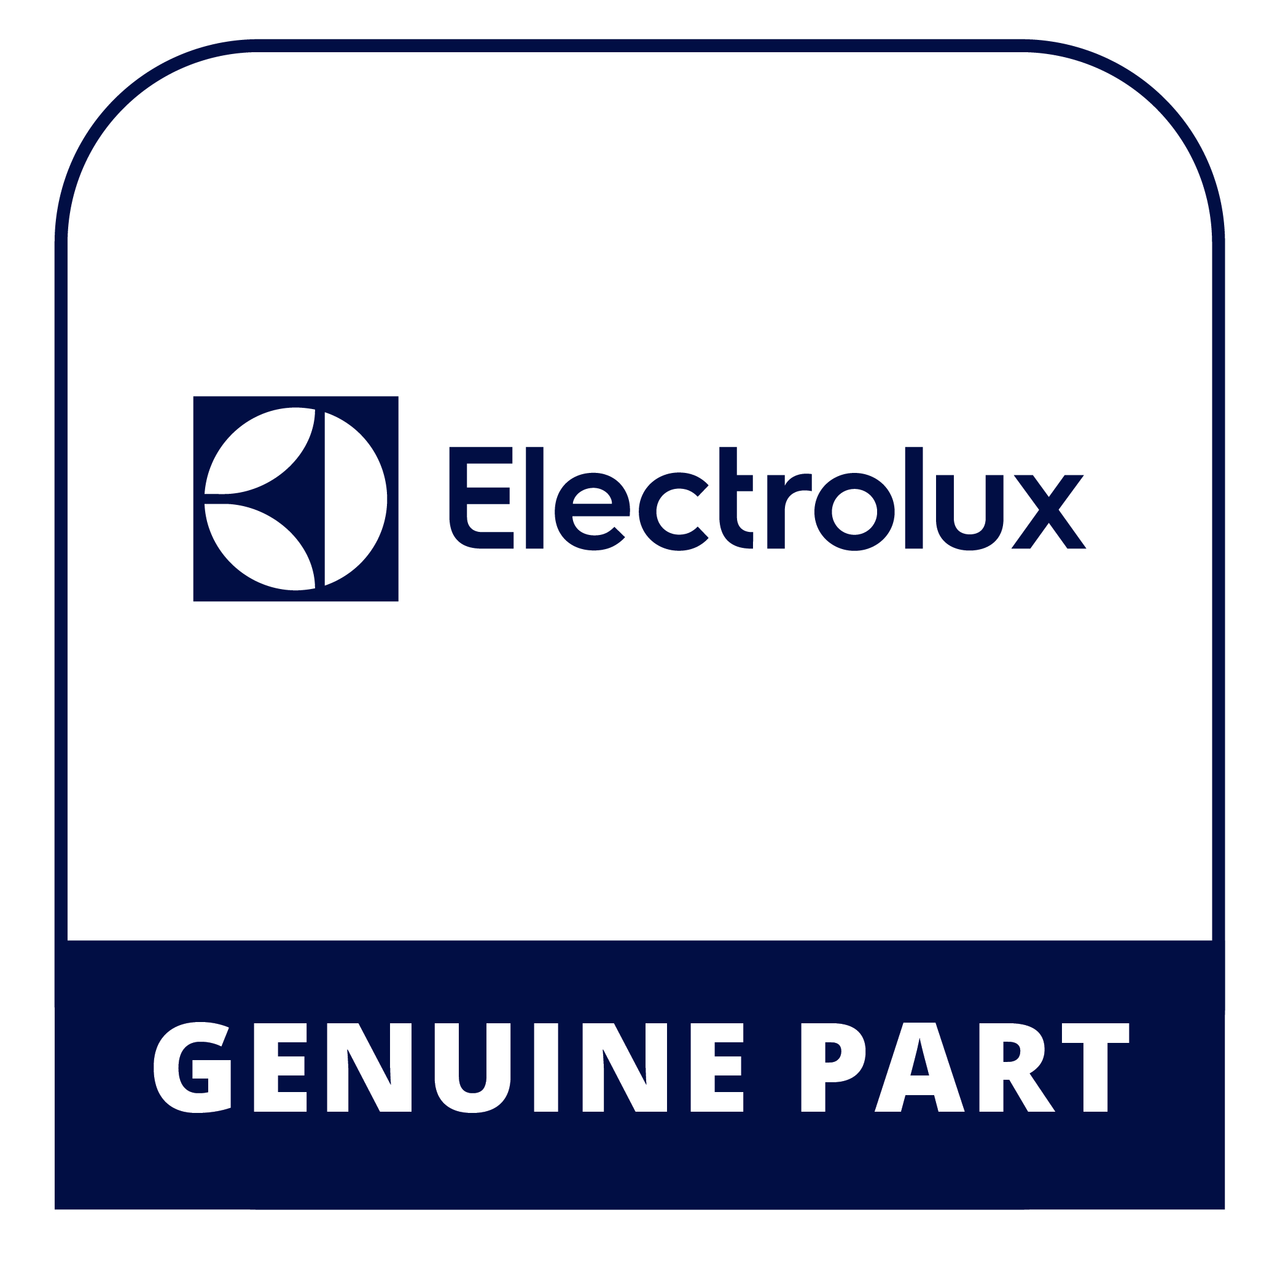 Frigidaire - Electrolux 5304533628 Grate - Genuine Electrolux Part